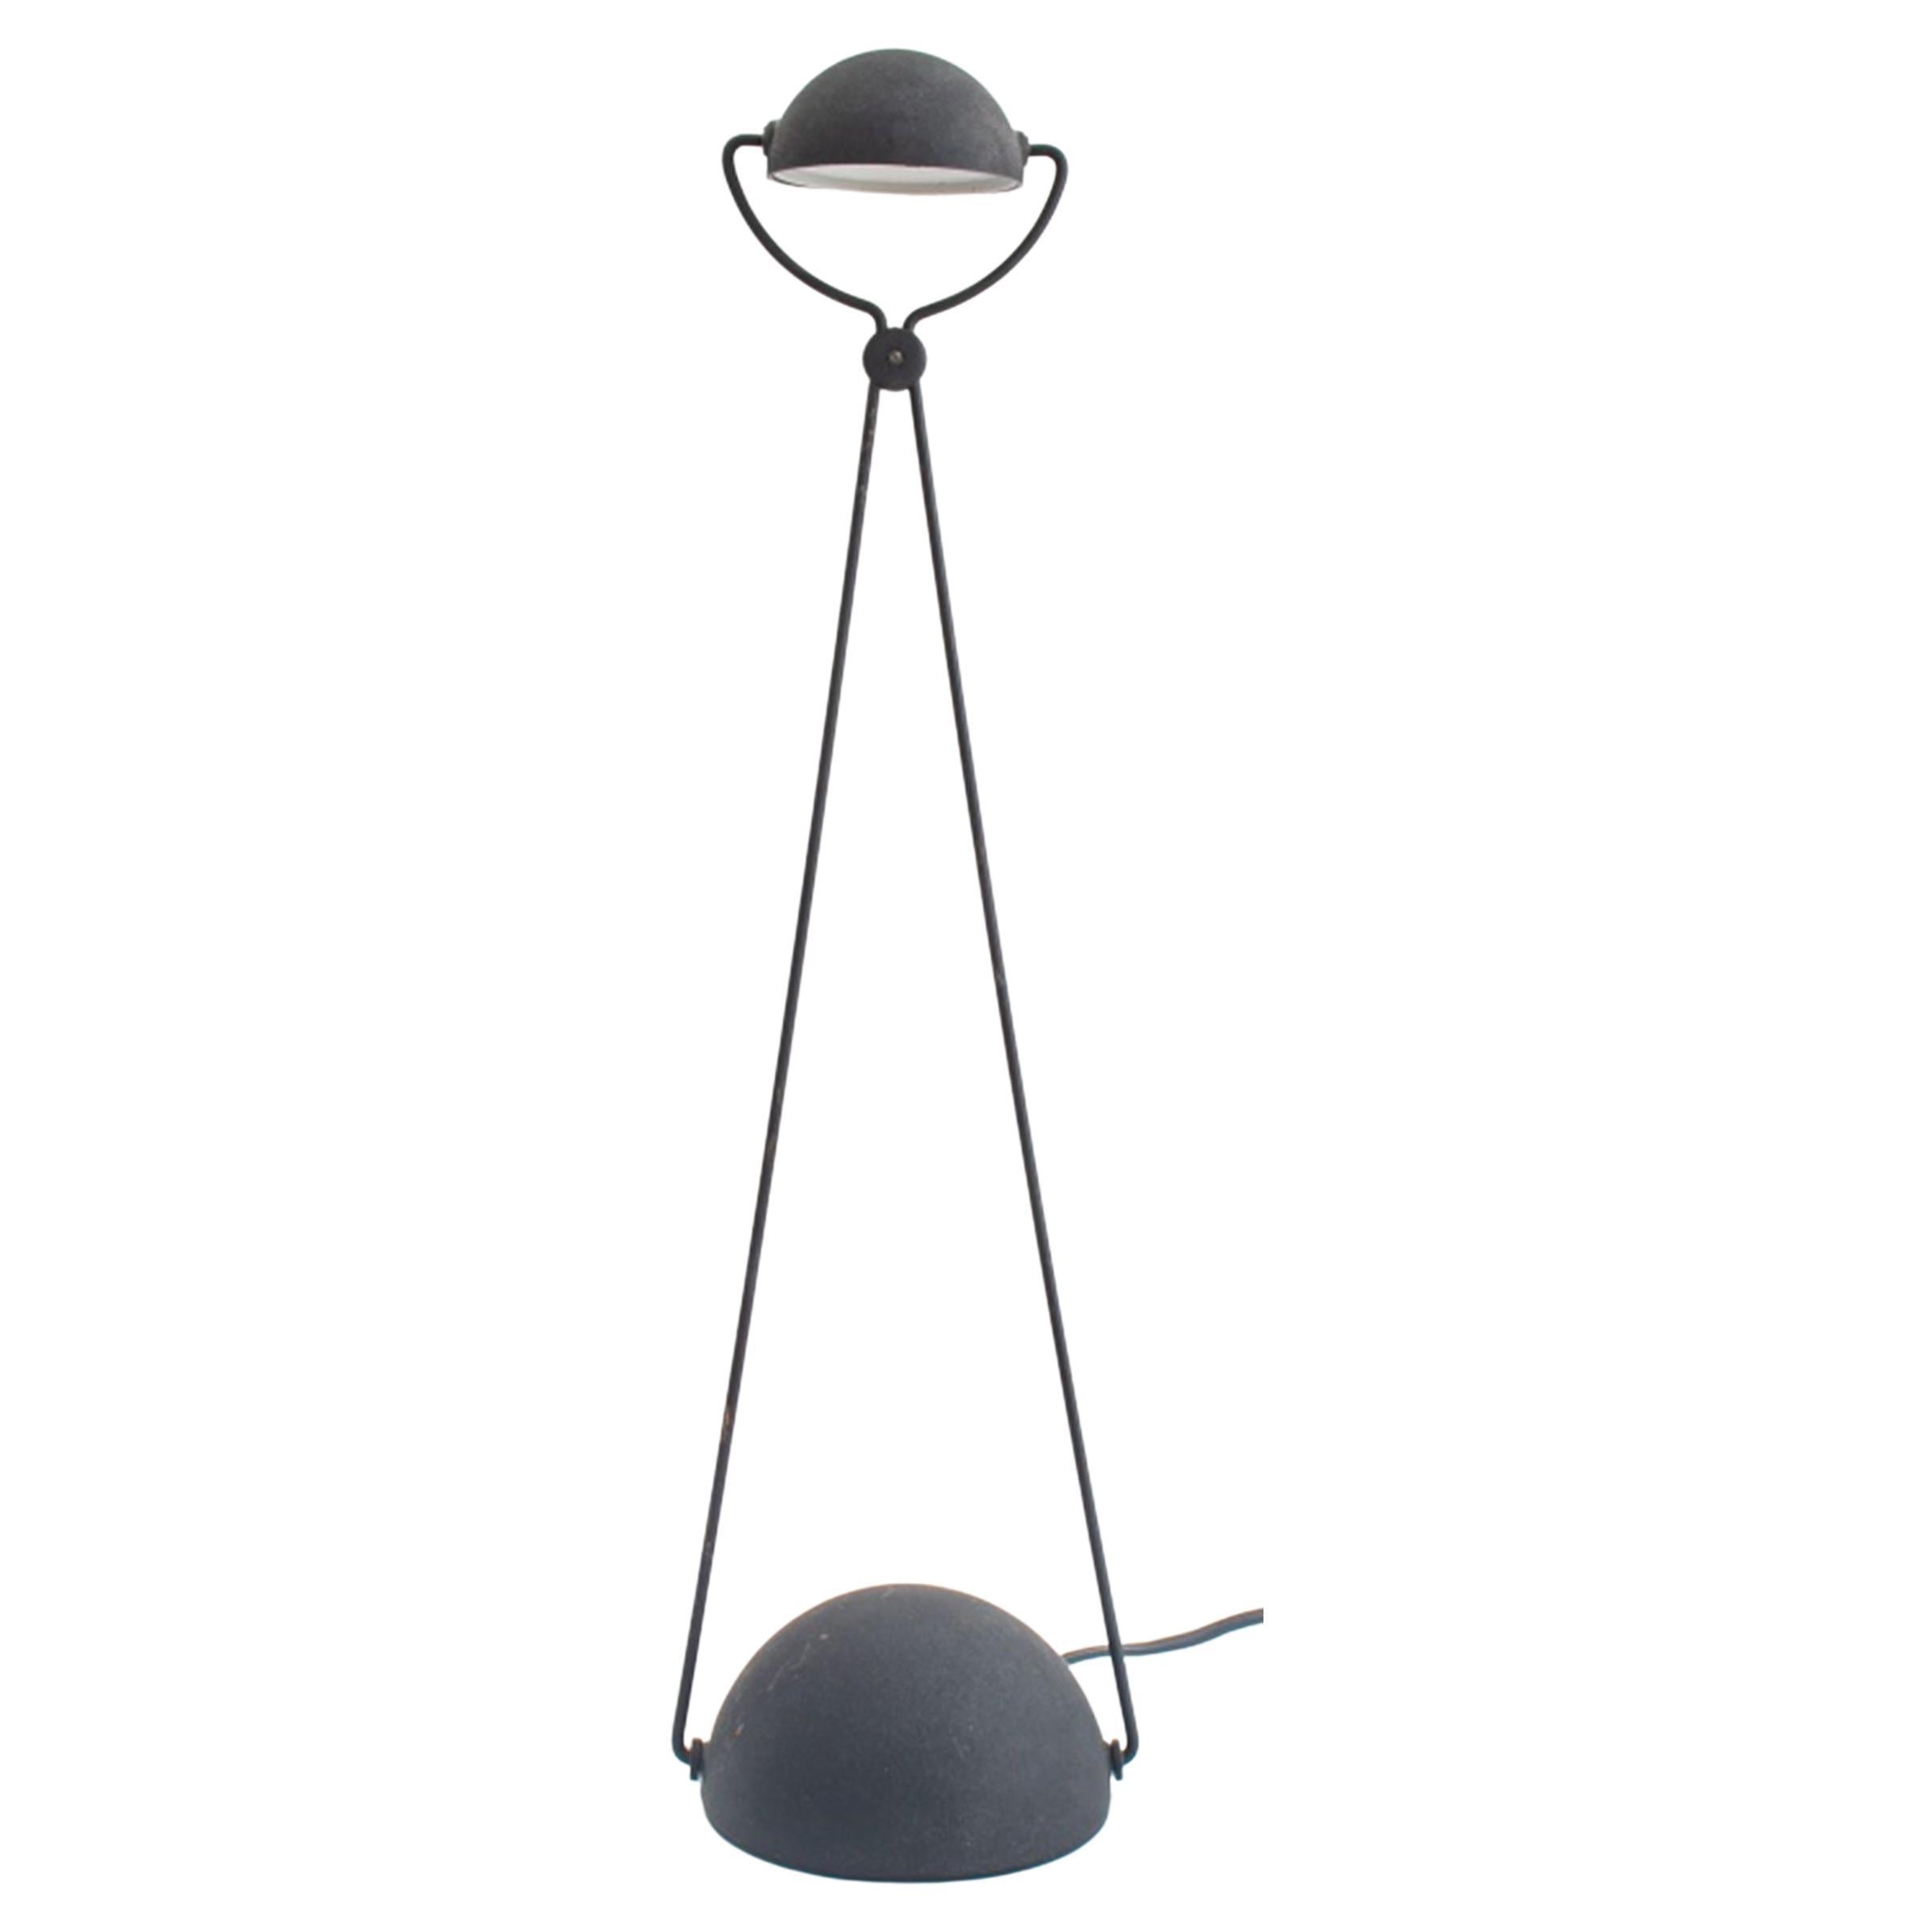 Stefano Cevoli Italian Meridiana Table Lamp